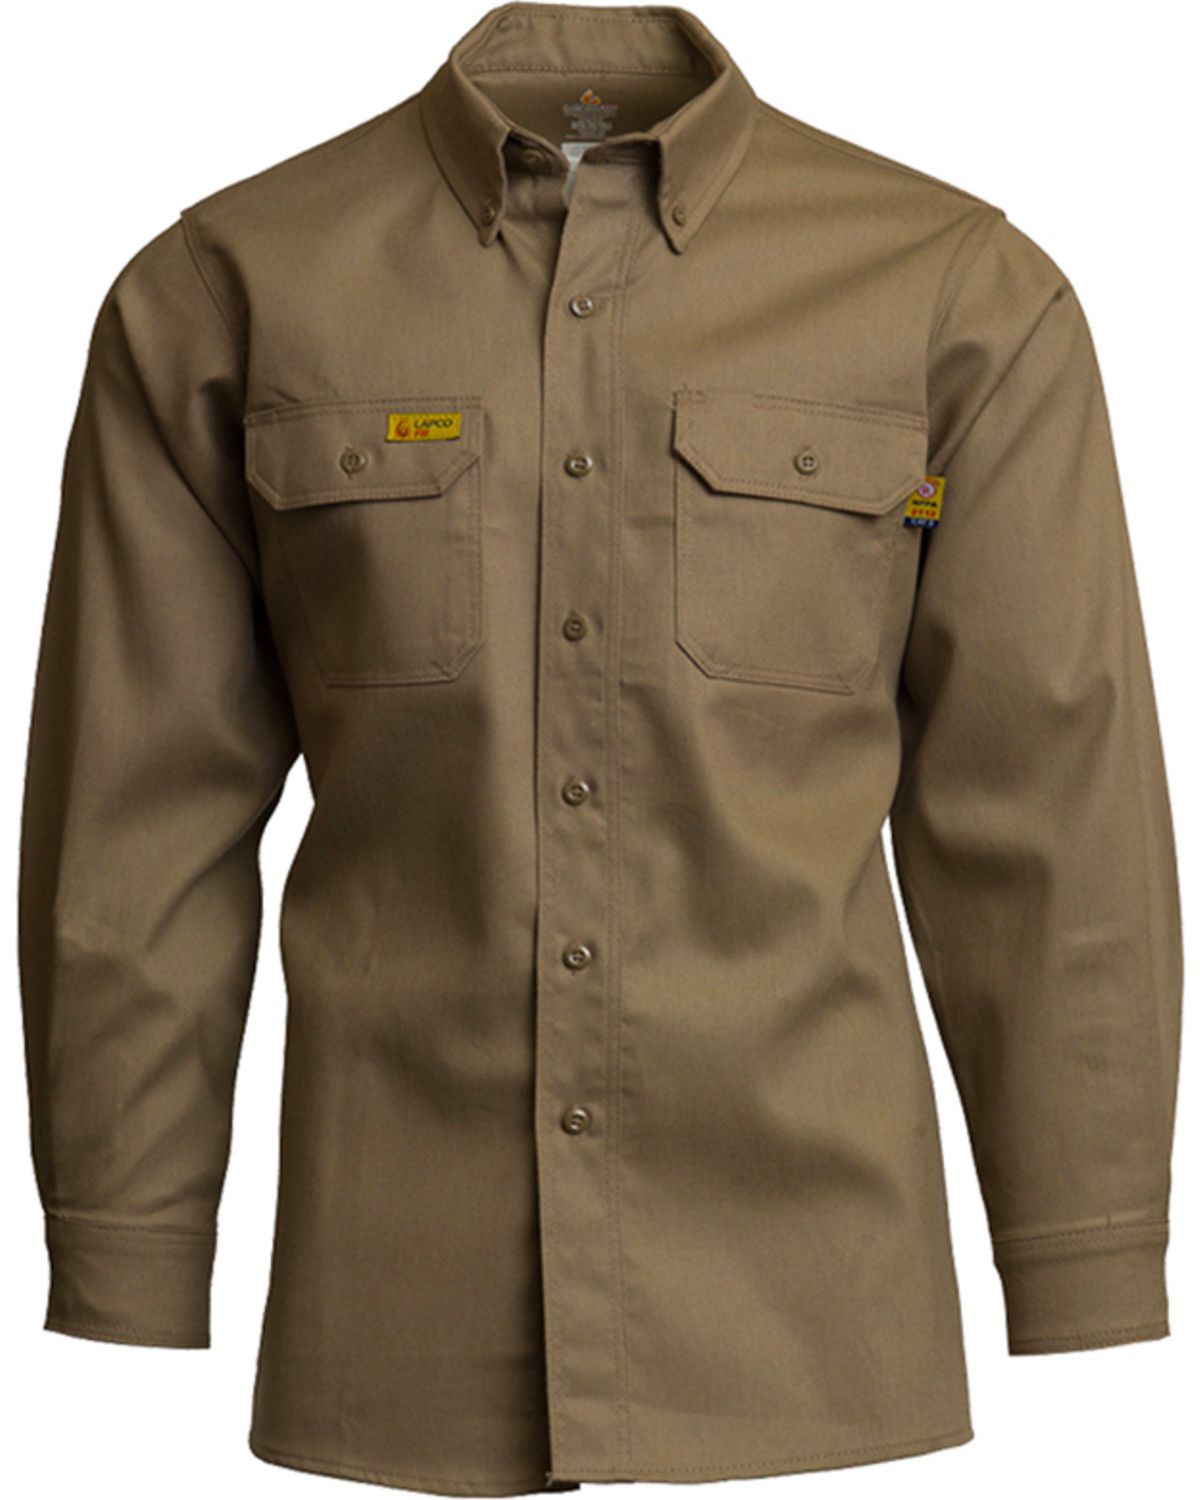 Lapco Men's Solid FR Long Sleeve Button Down Uniform Work Shirt